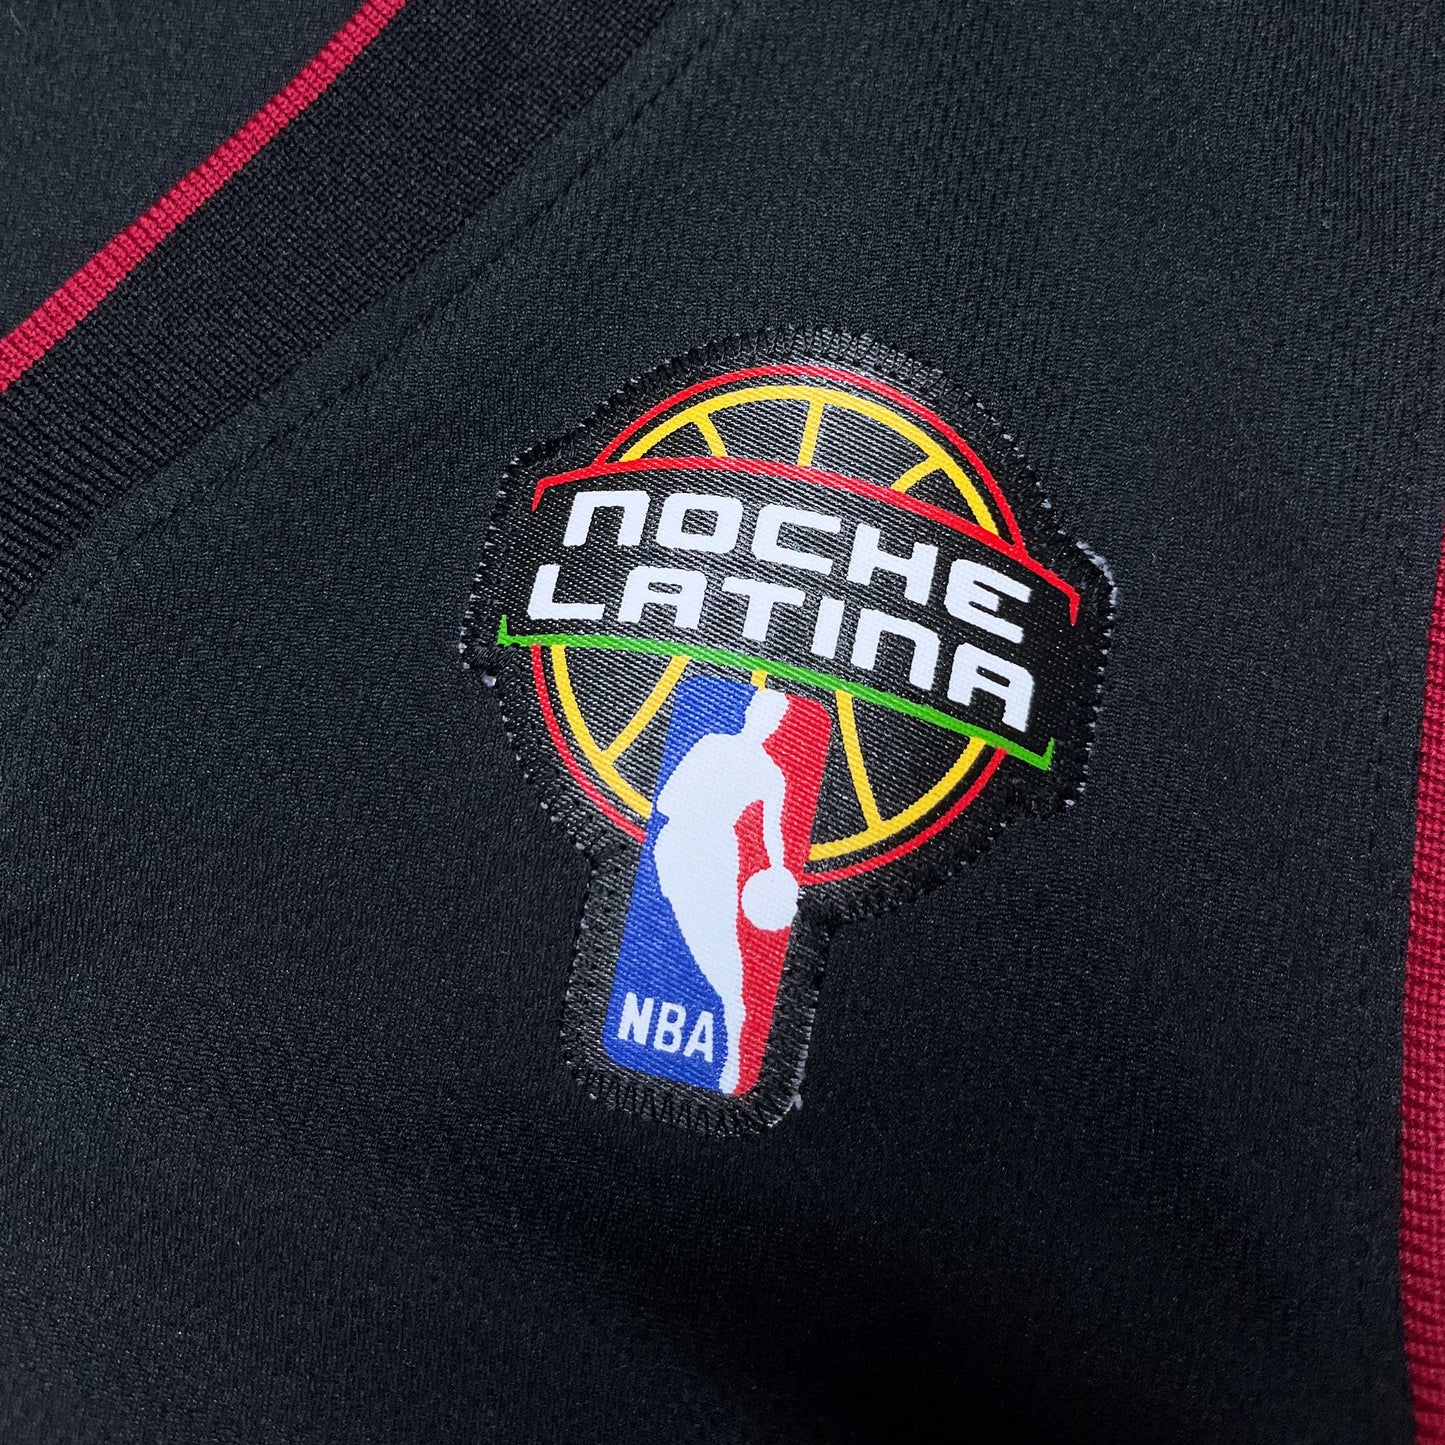 Miami Heat - Lebron James - Größe S - Adidas - NBA Trikot Noche Latina